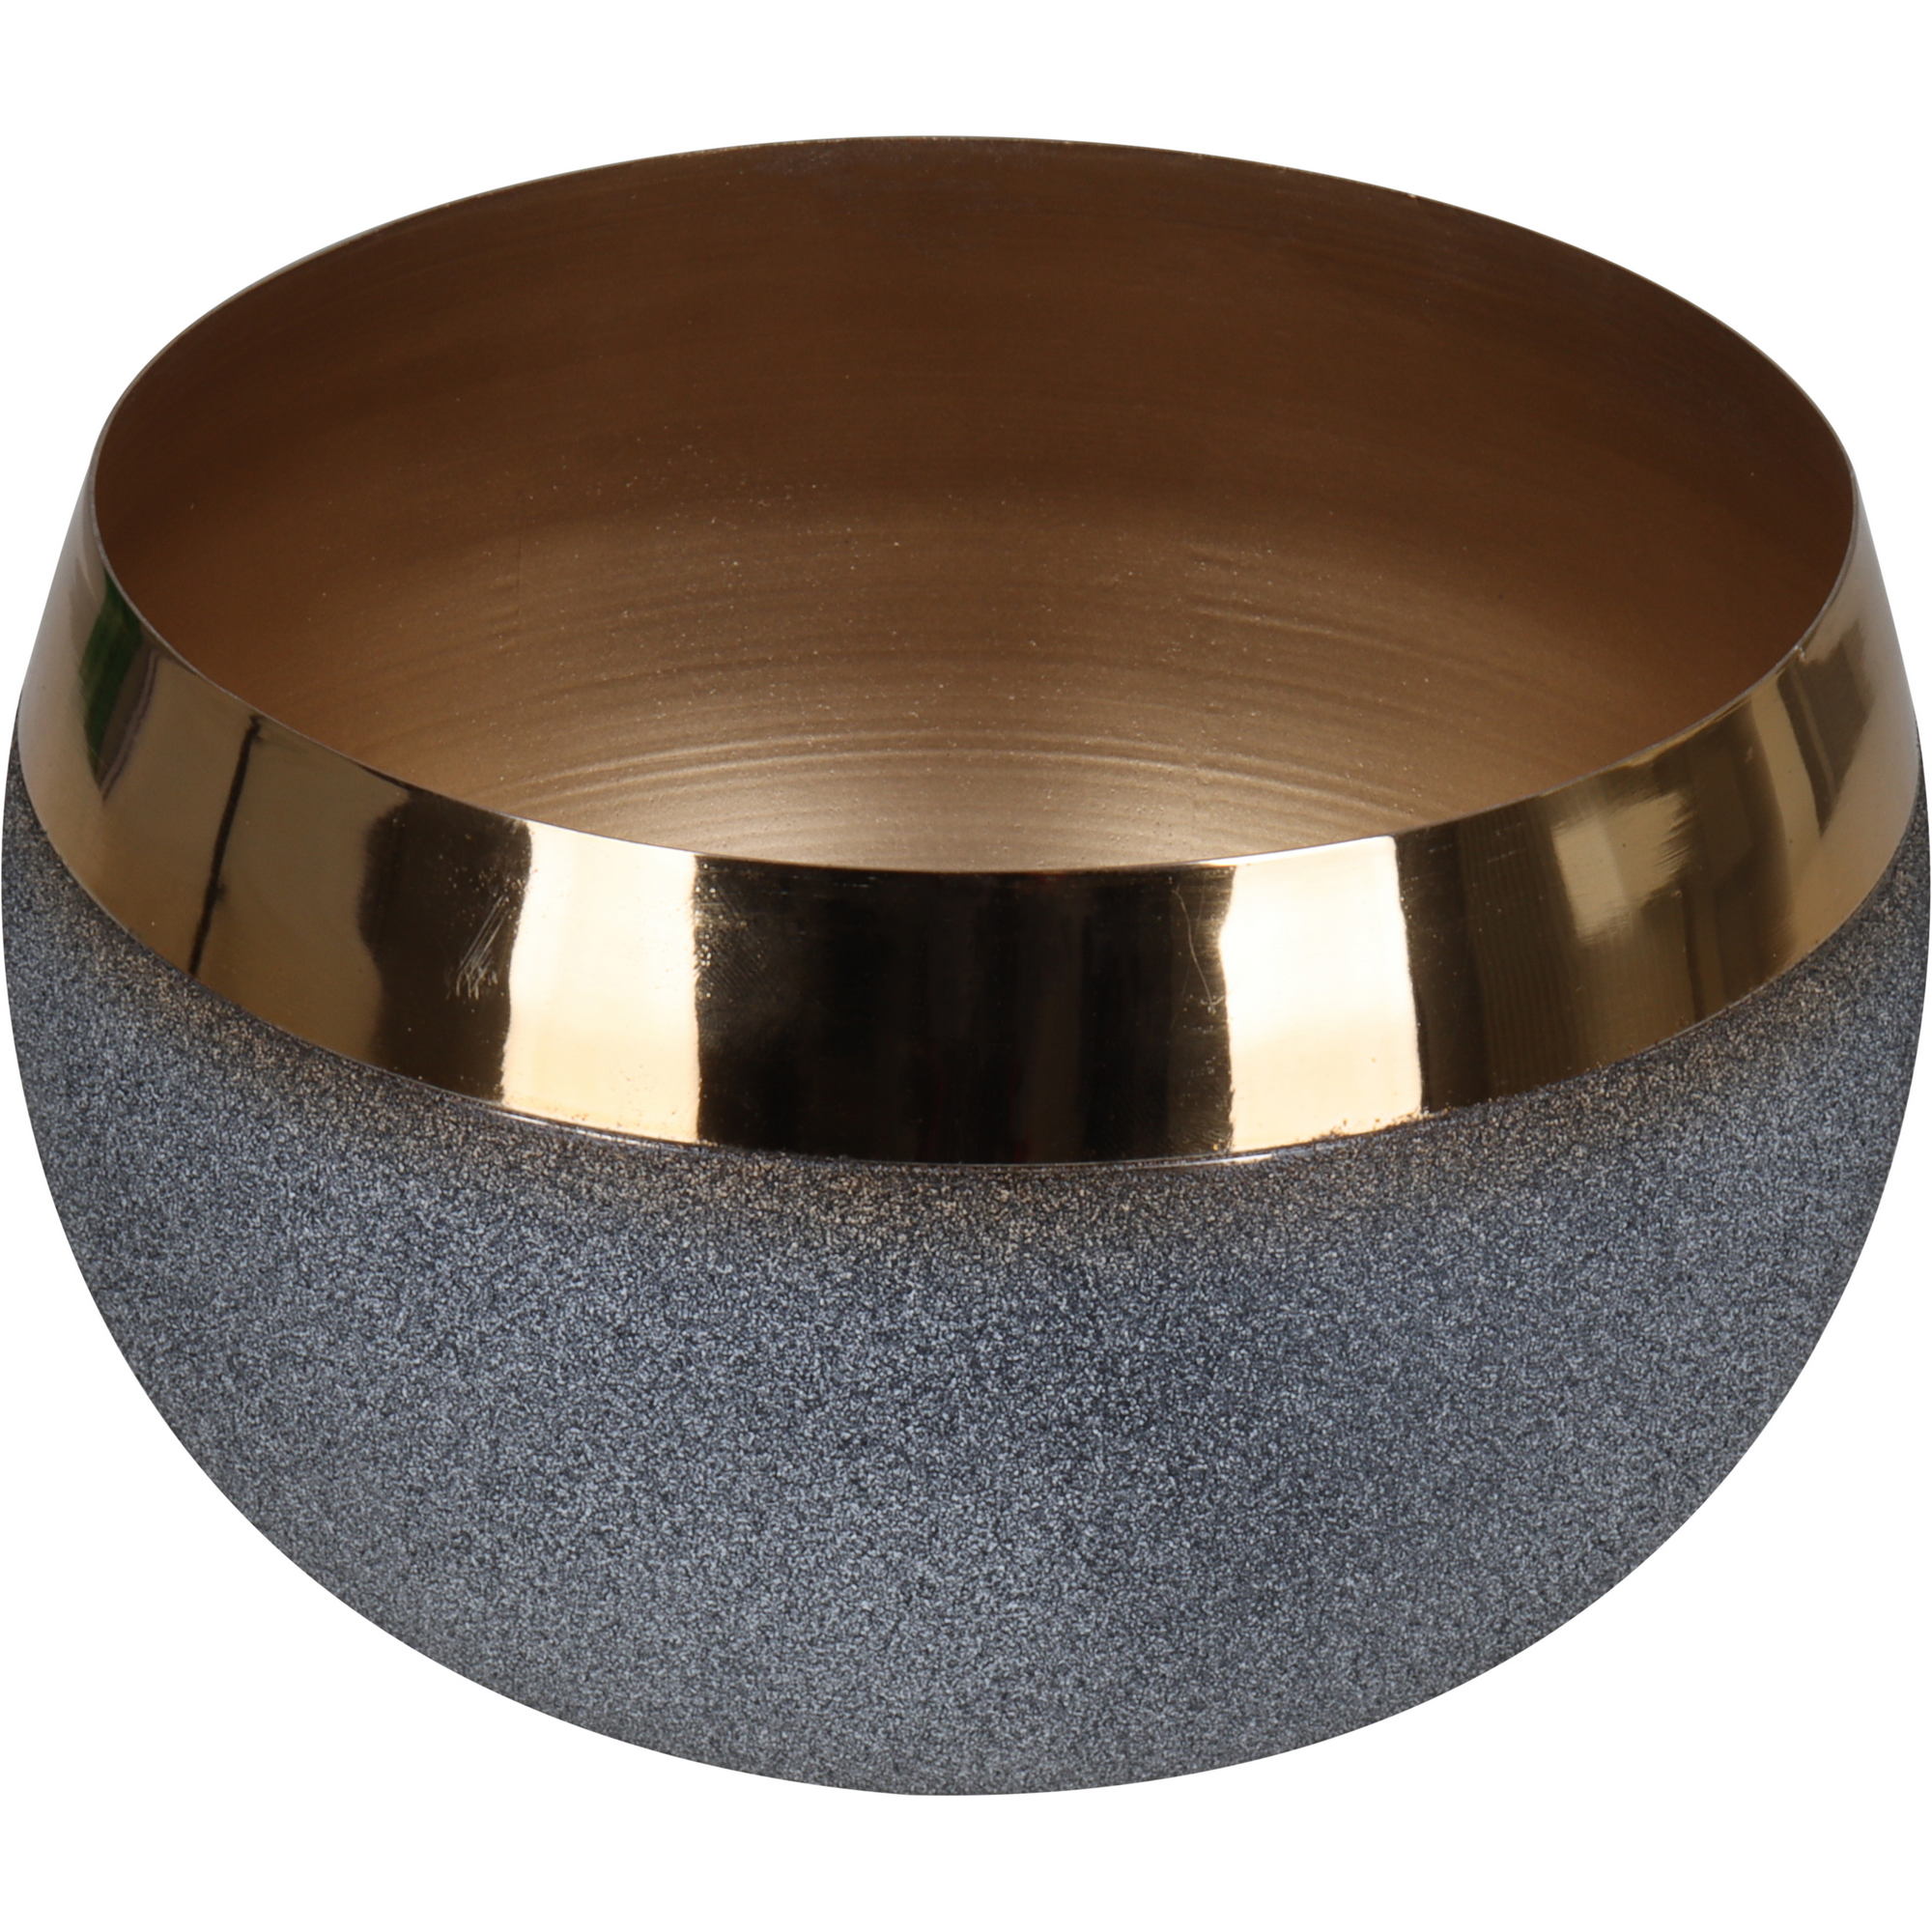 Metallübertopf lackiert grau mit Goldrand 15 x 17 x 12 cm + product picture